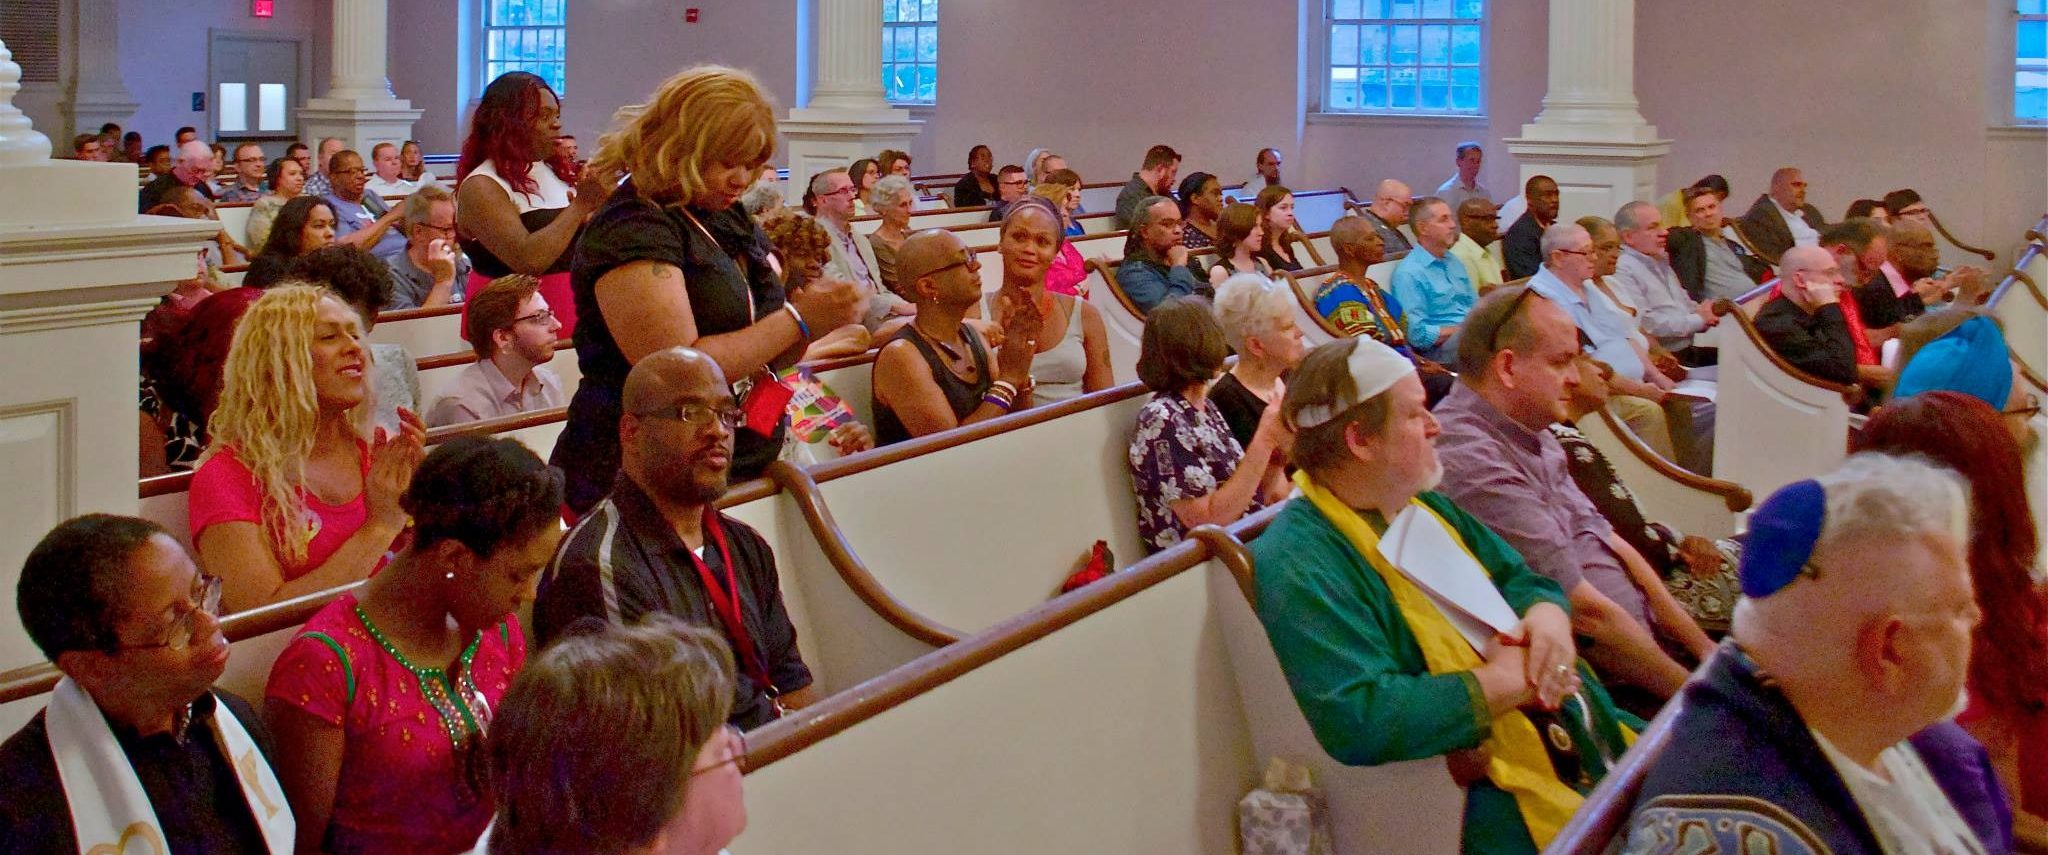 Volunteers Needed for Capital Pride Interfaith Choir